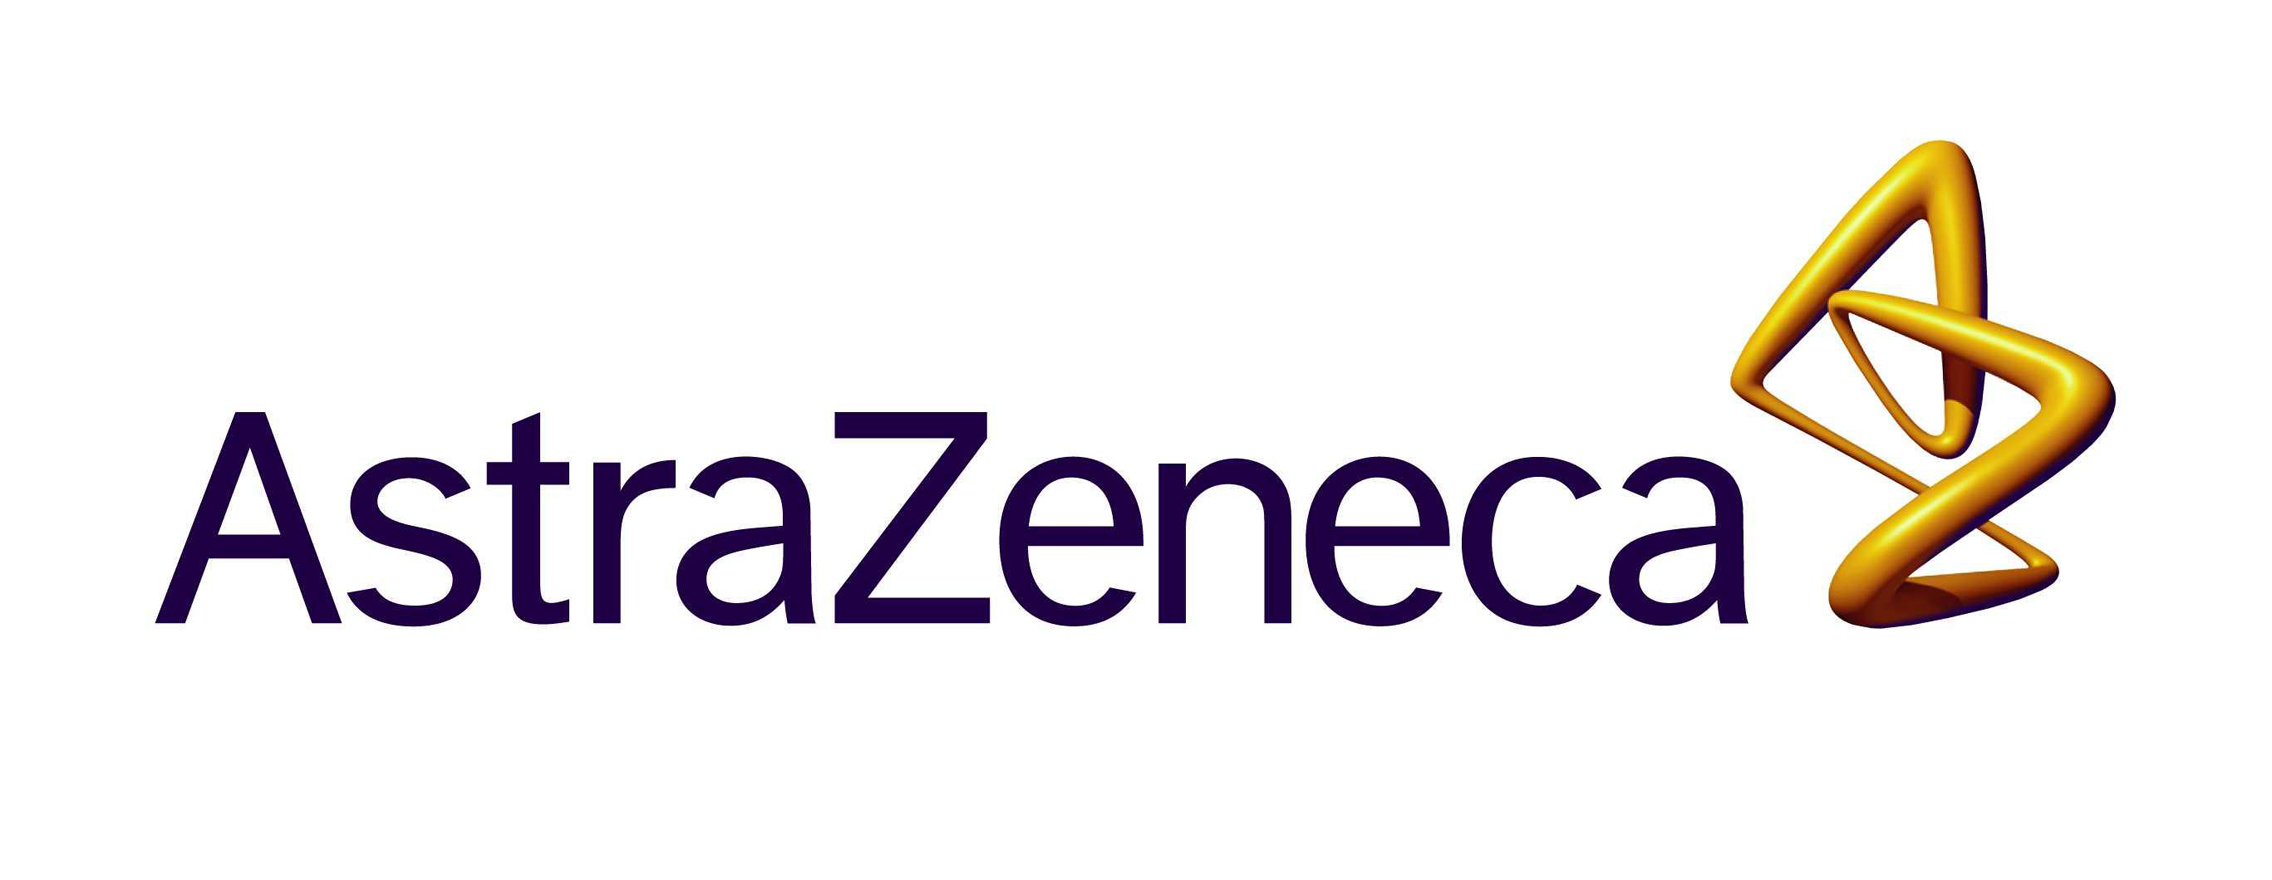 AstraZeneca-logo-3D